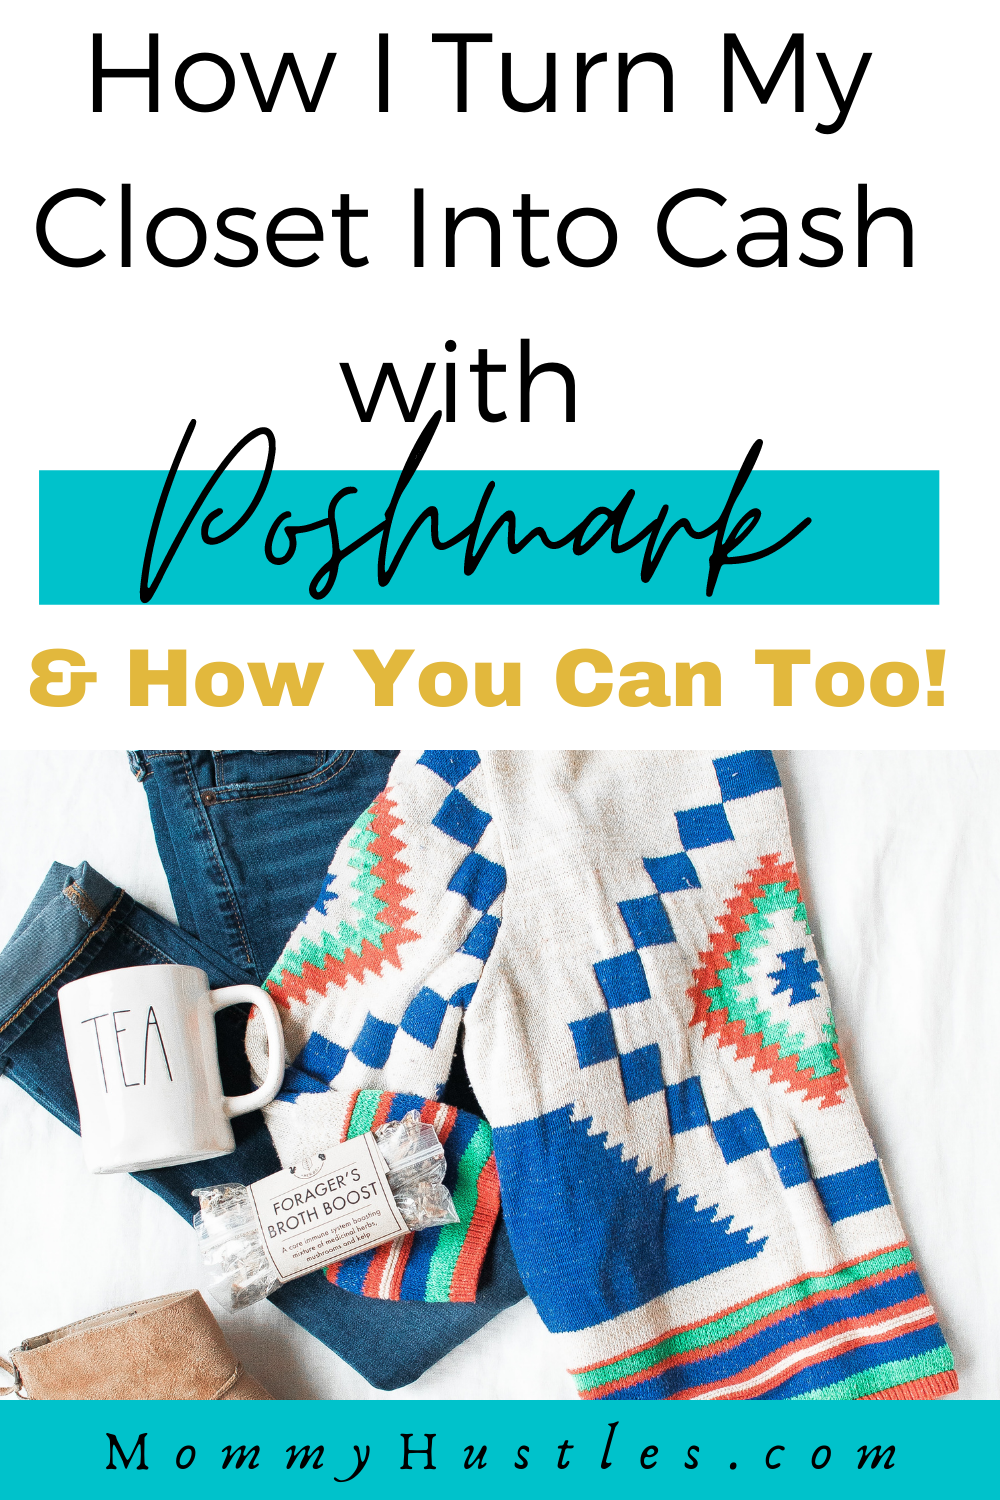 How I Turn My Closet into Cash with Poshmark